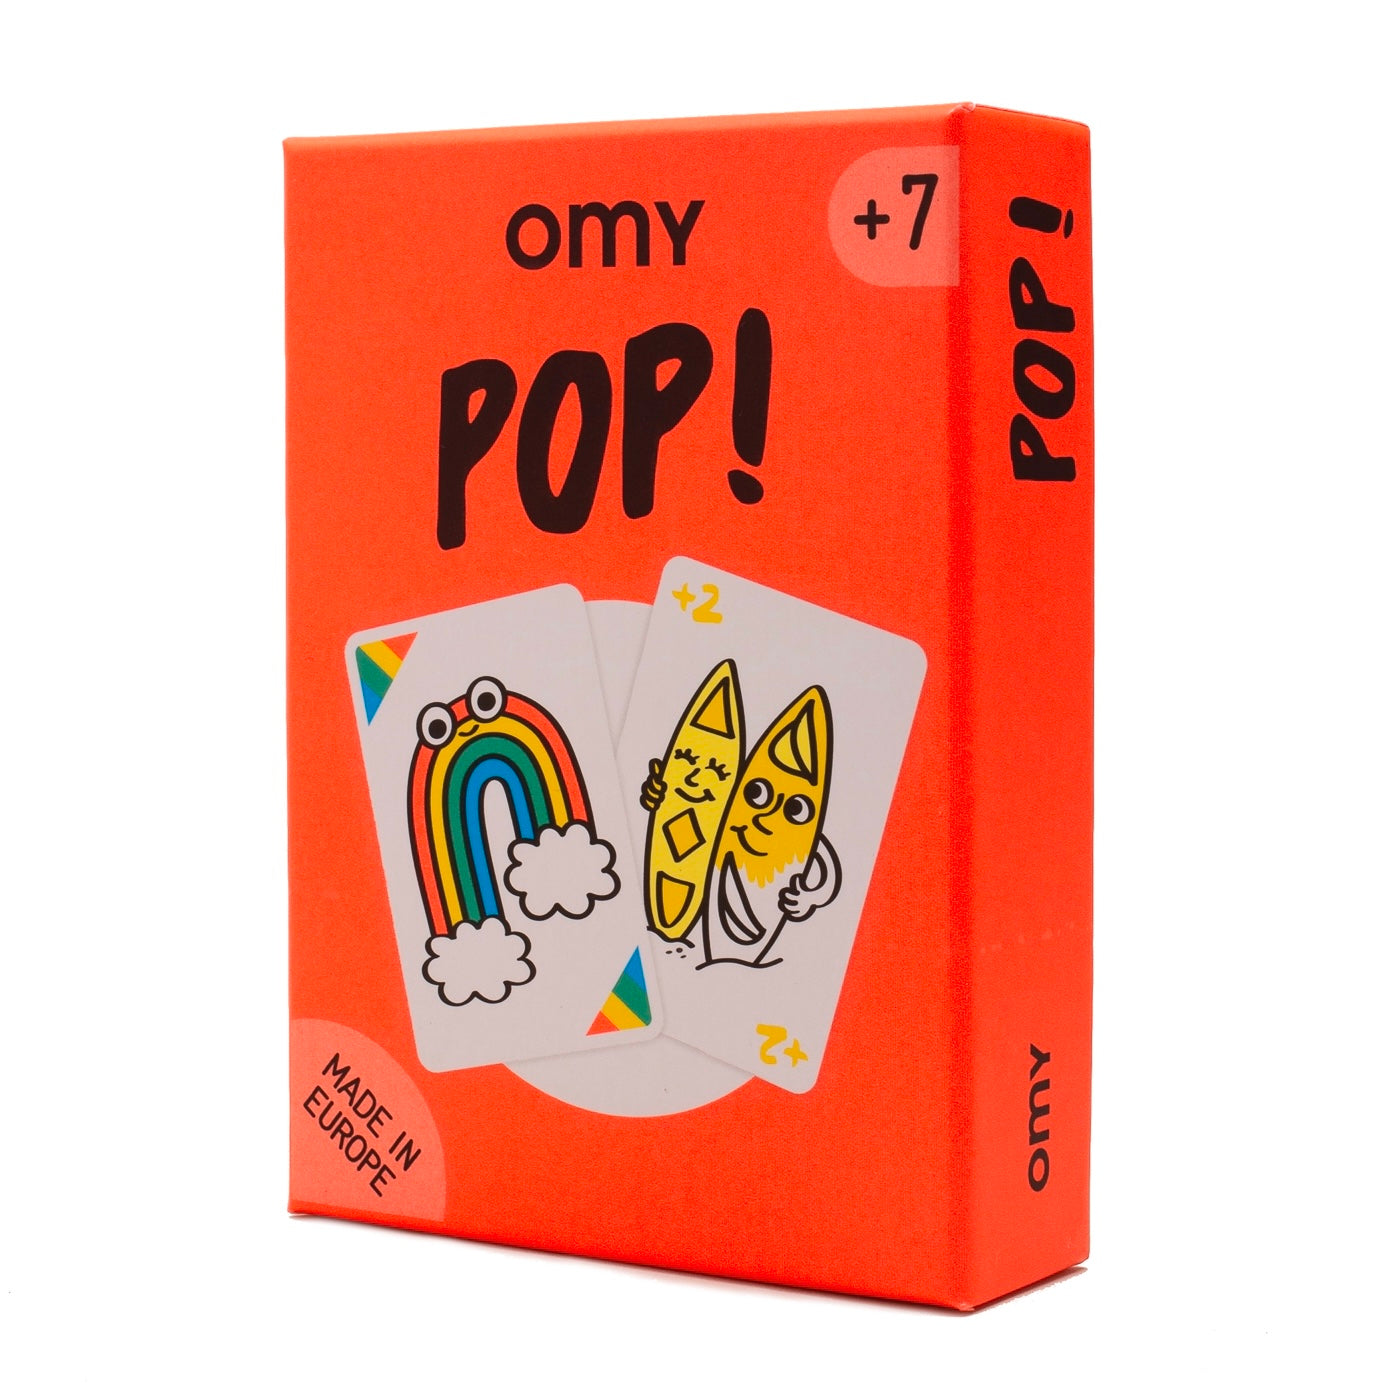 Pop! cardgame (7+ years)